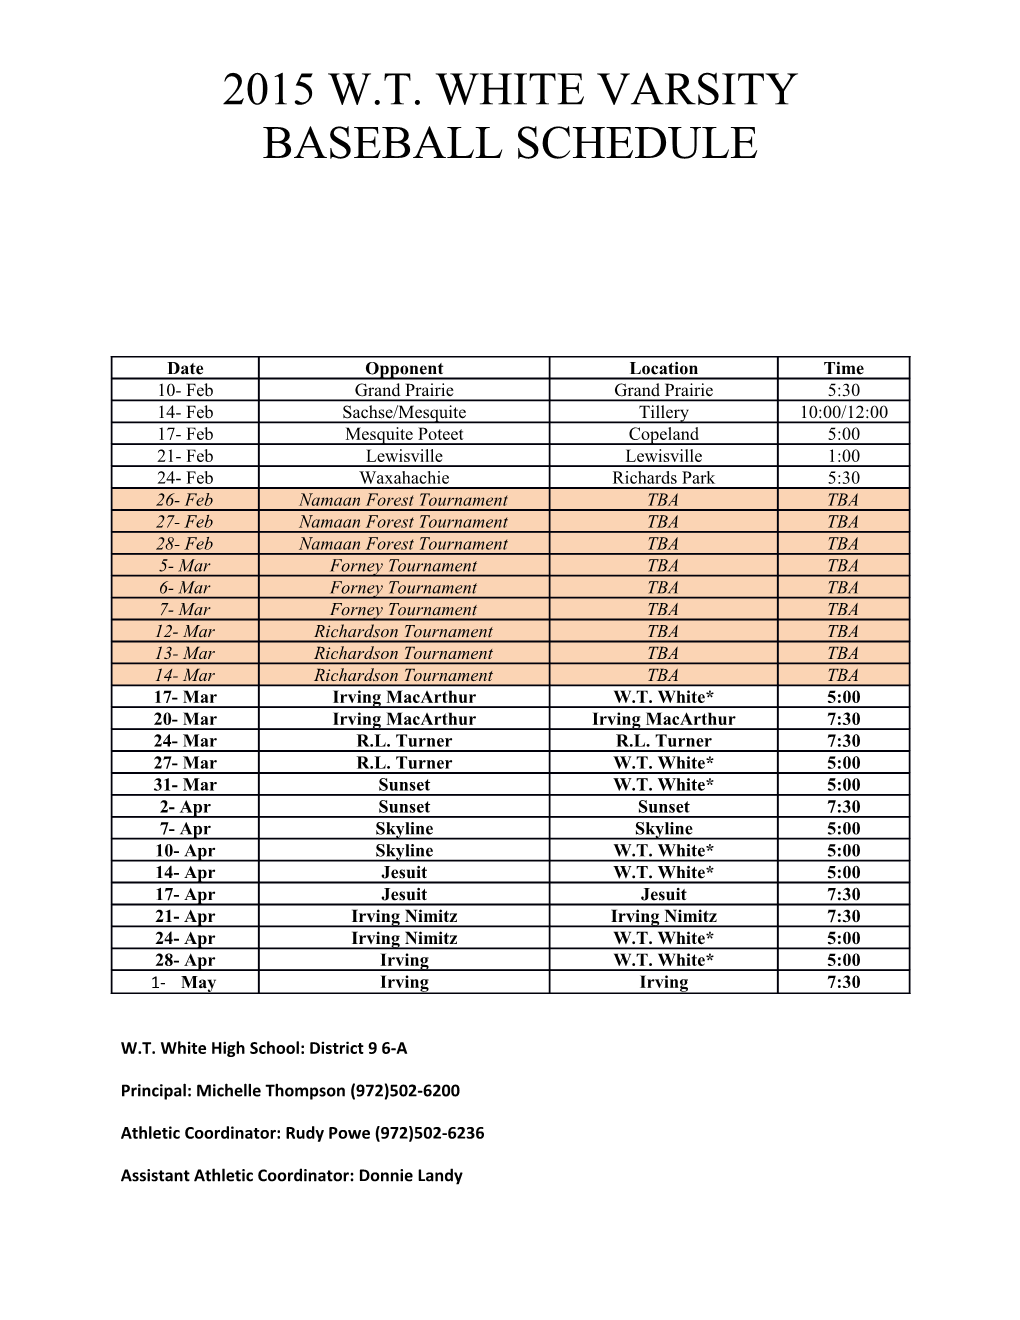 2015 W.T. White Varsity Baseball Schedule